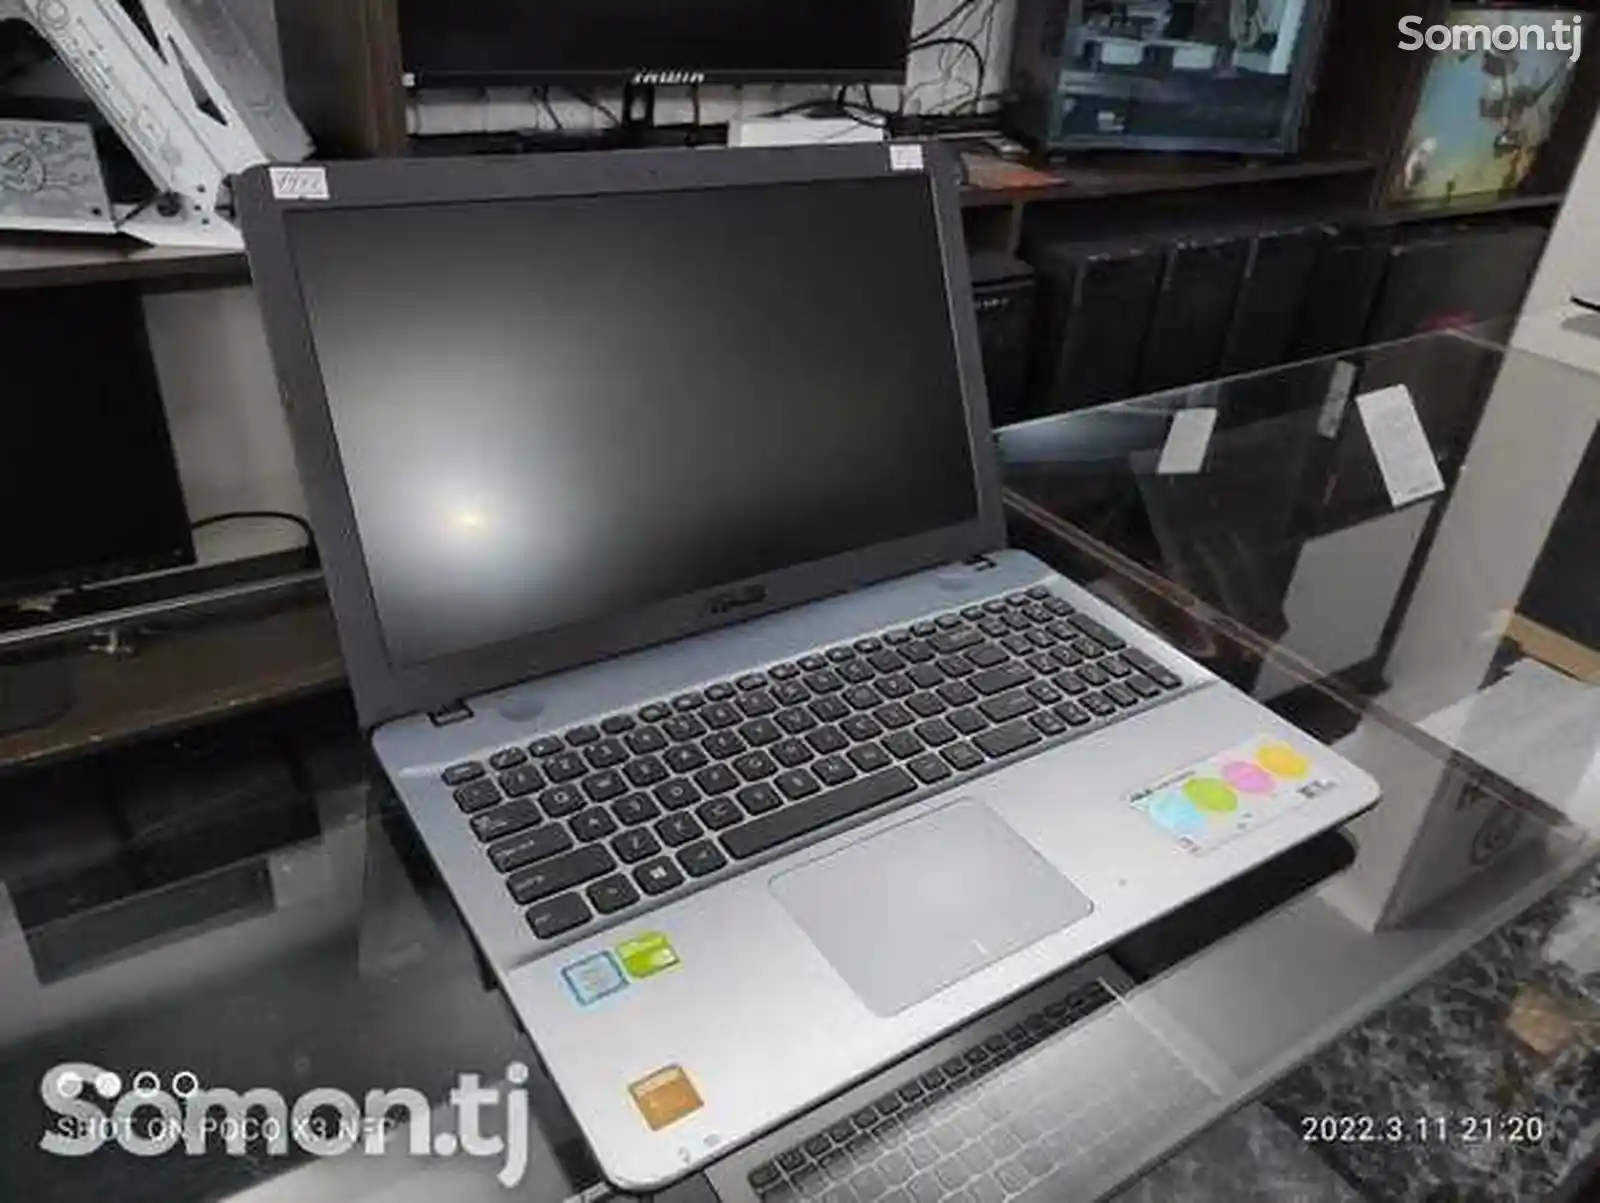 Игровой ноутбук Asus X541UJ i7-7500U DDR4 8GB GEFORCE 920M 2GB-5